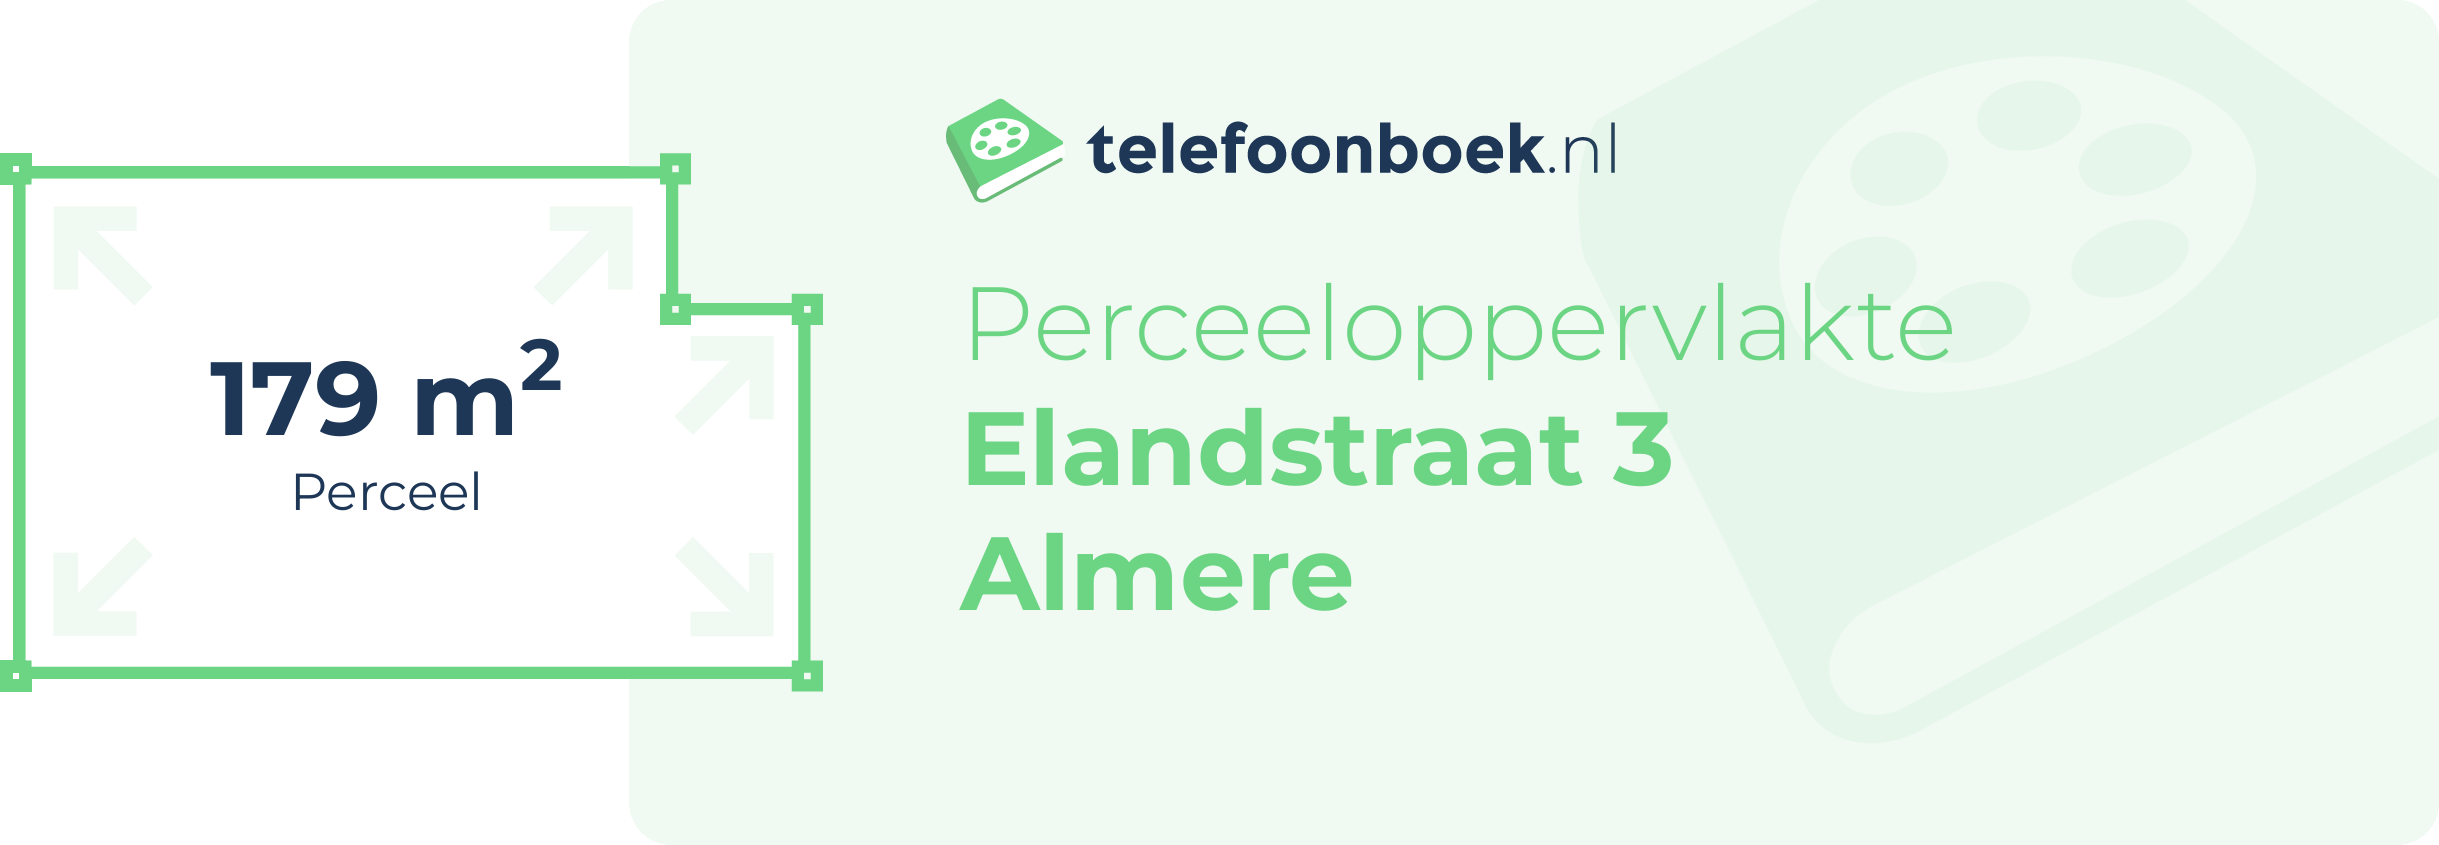 Perceeloppervlakte Elandstraat 3 Almere